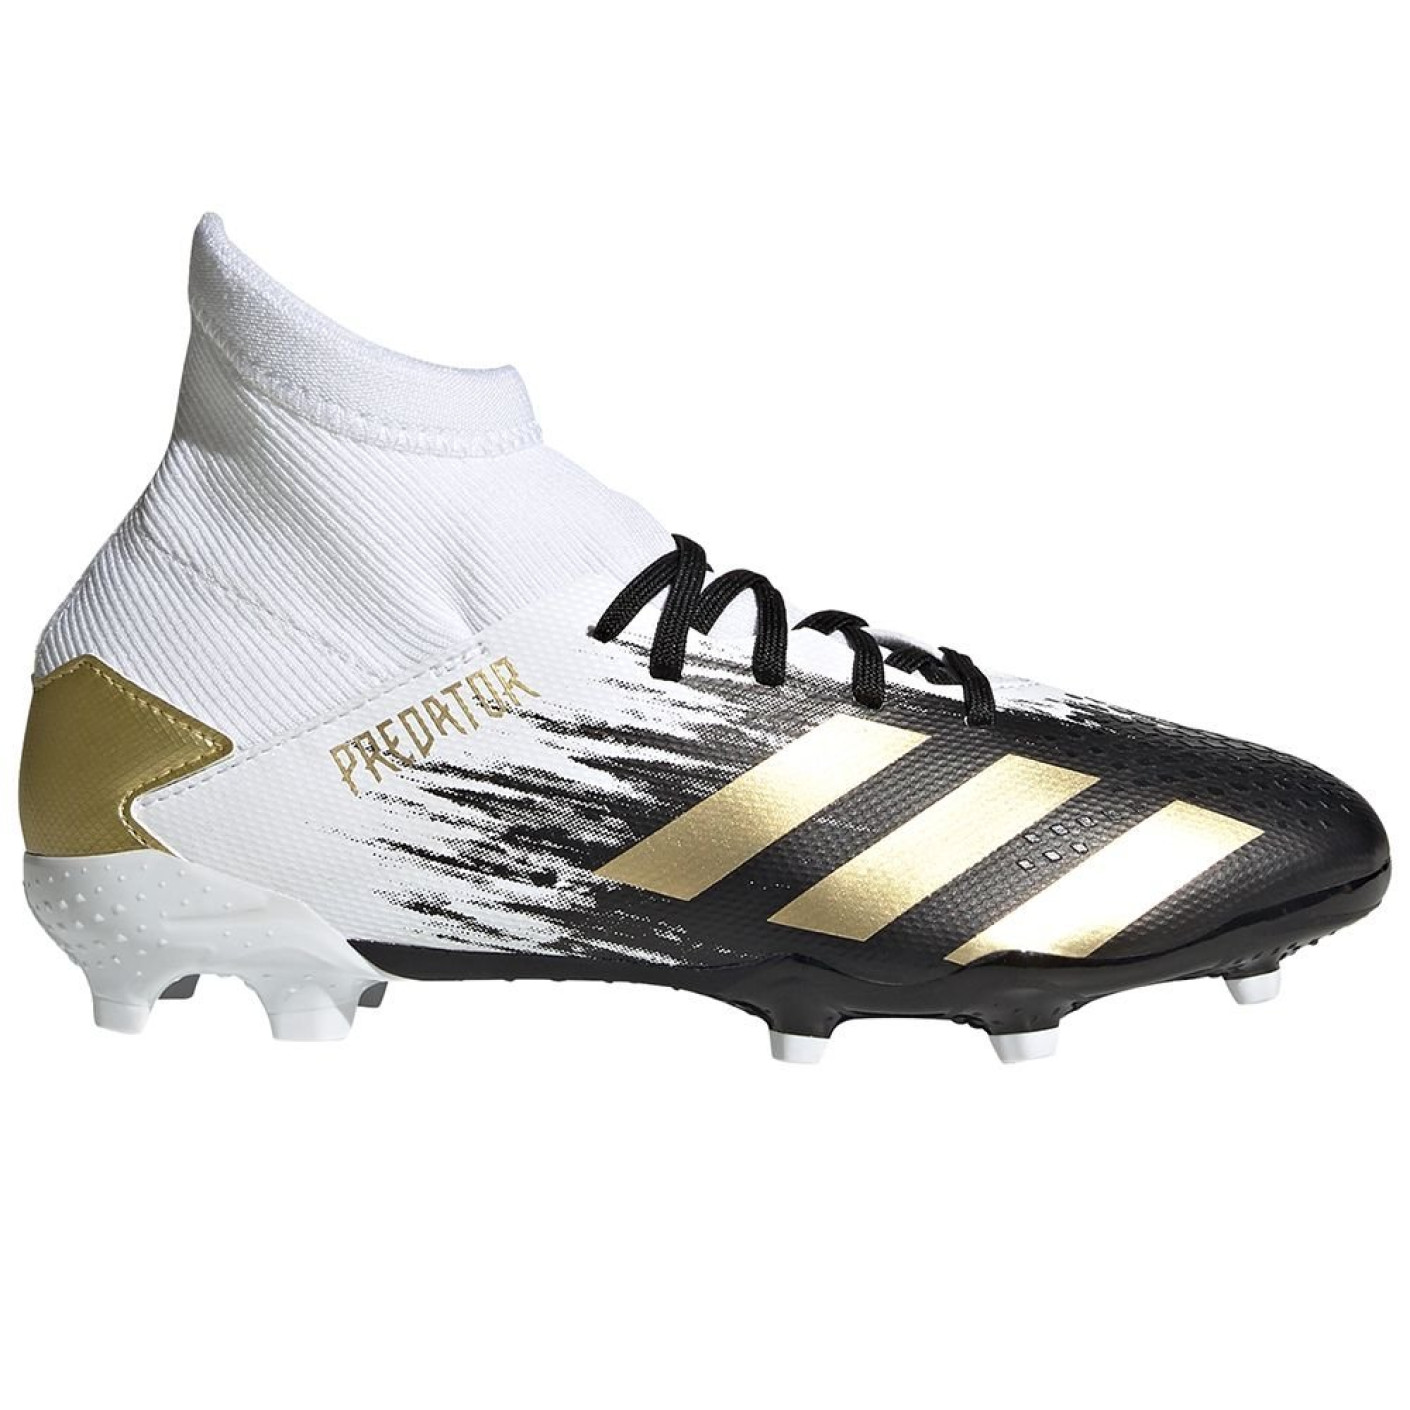 https://www.voetbalshop.be/media/catalog/product/cache/d81c8dc66c69ceb69419c2e7e72e896d/5/3/53257_adidas-predator-20.3-gras-voetbalschoenen-fg-kids-wit-goud-zwart_1.jpg